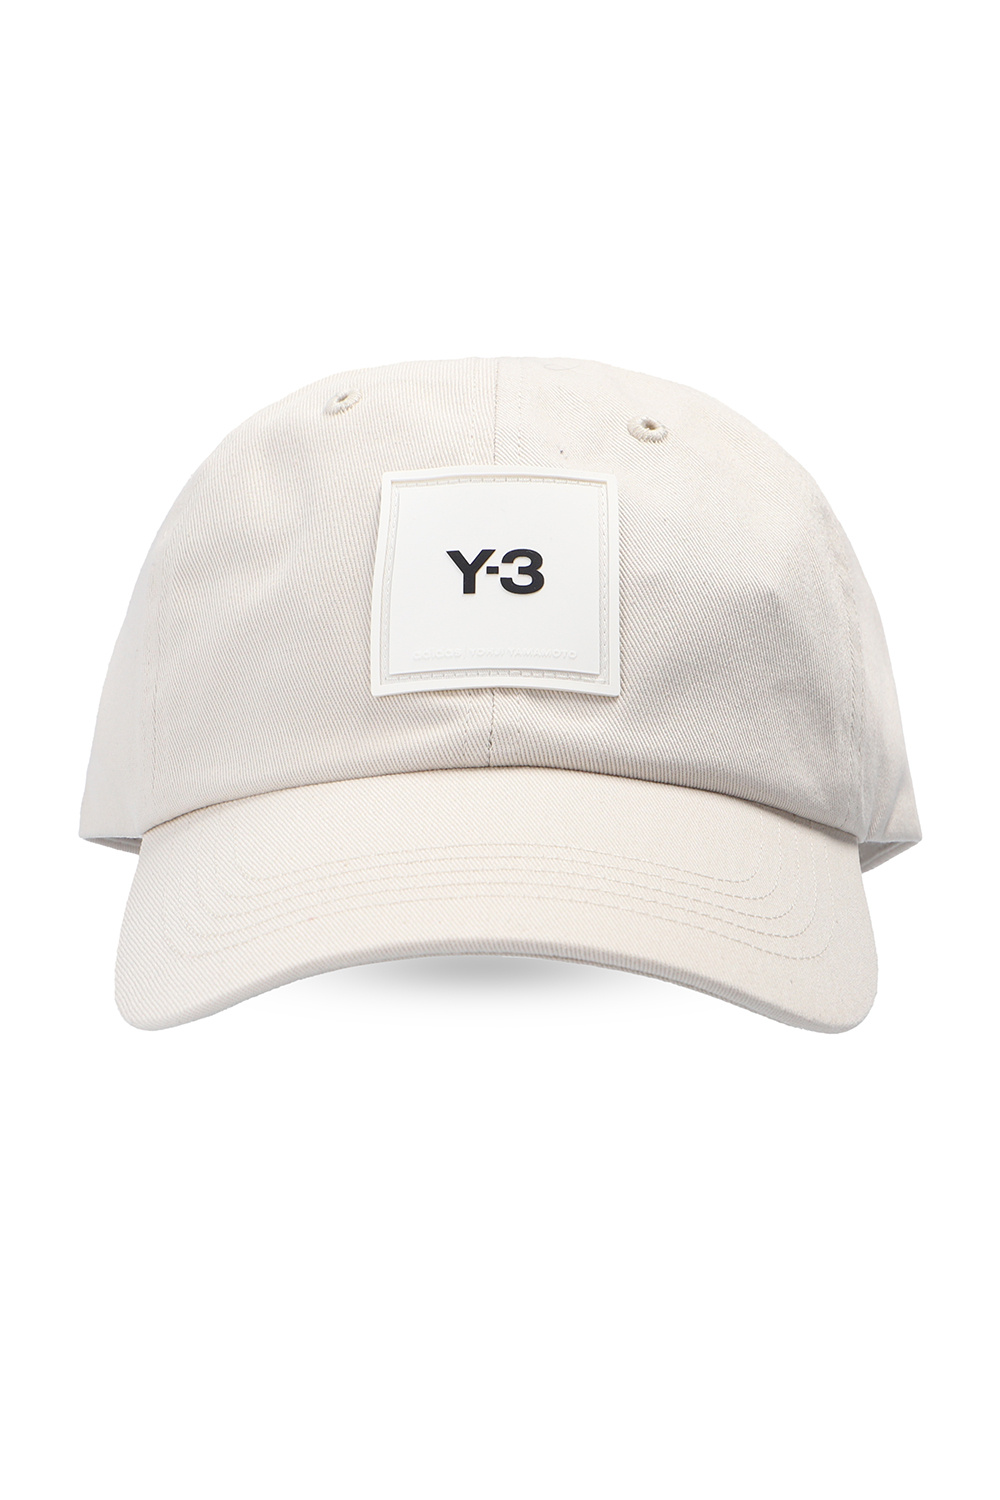 Y-3 Yohji Yamamoto Baseball cap with logo | Men's Accessories | Vitkac